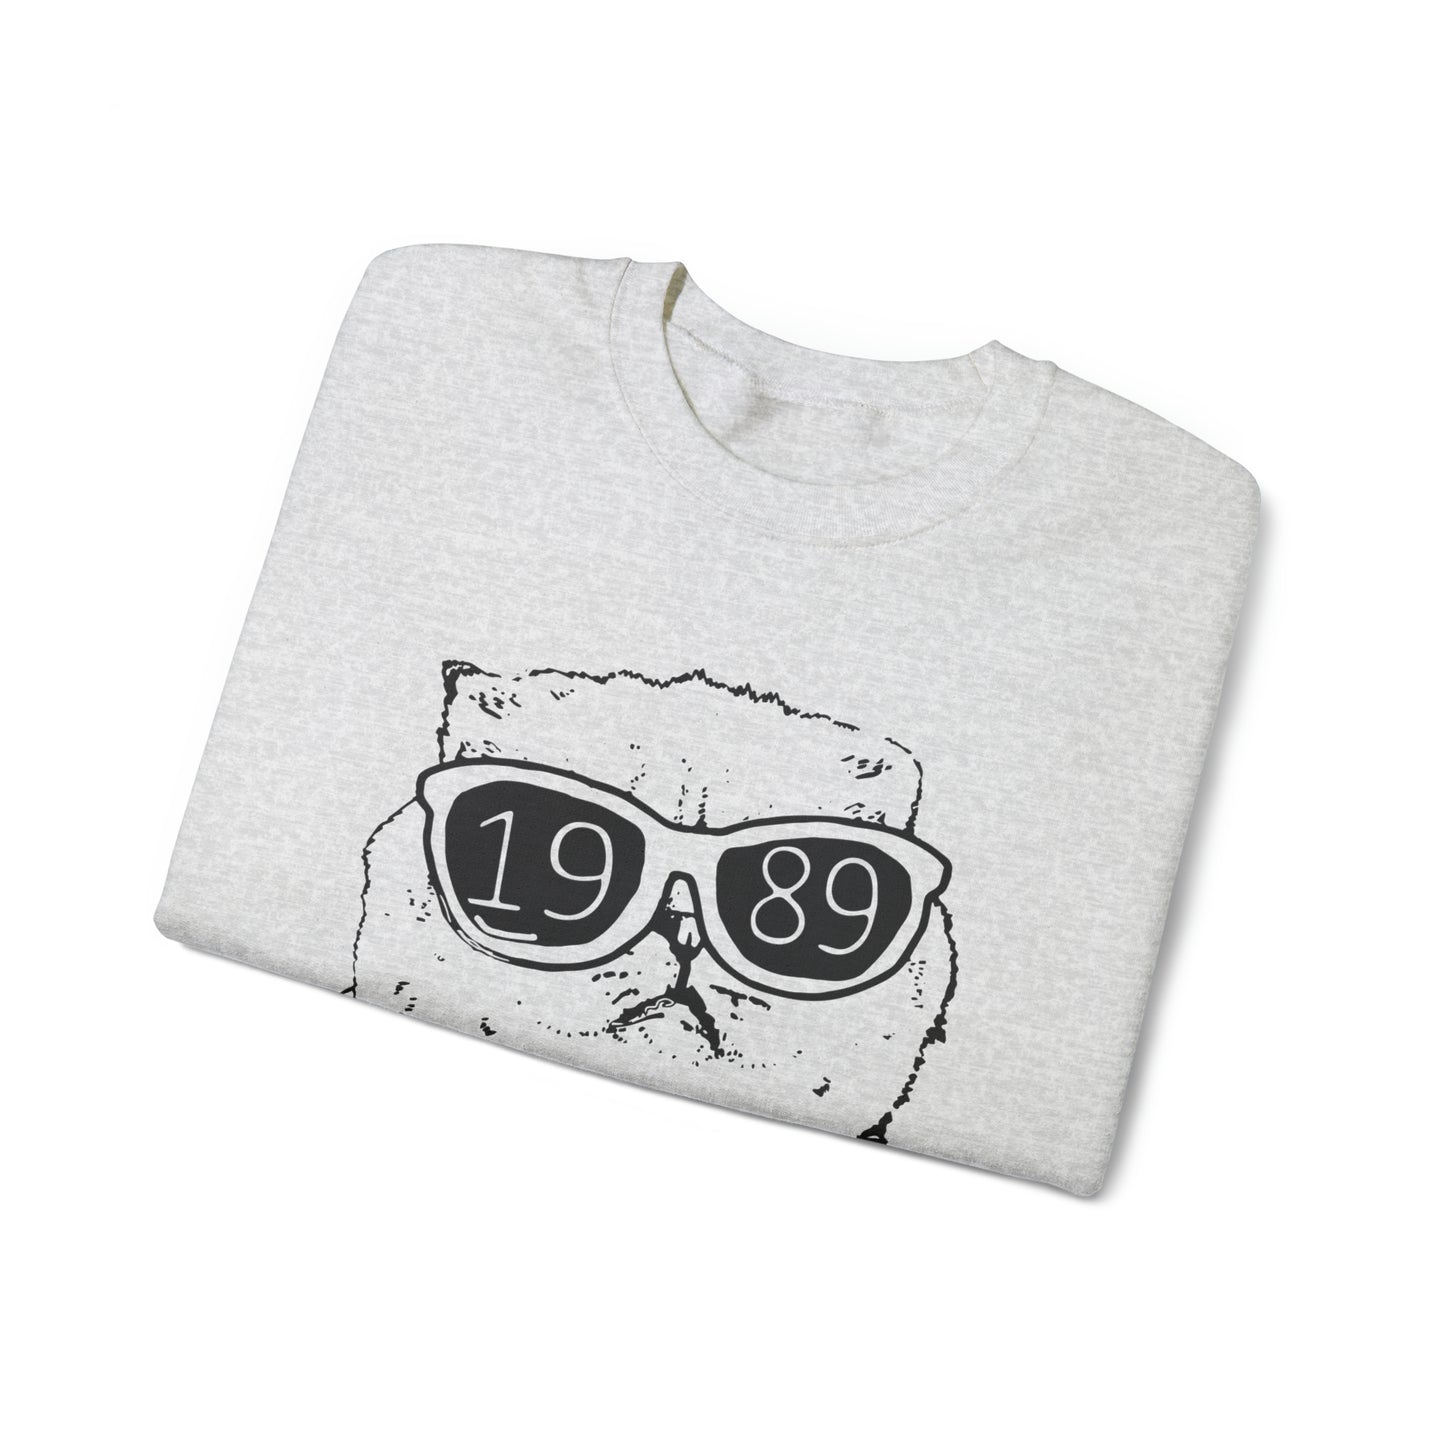 TS Cat Sweatshirt